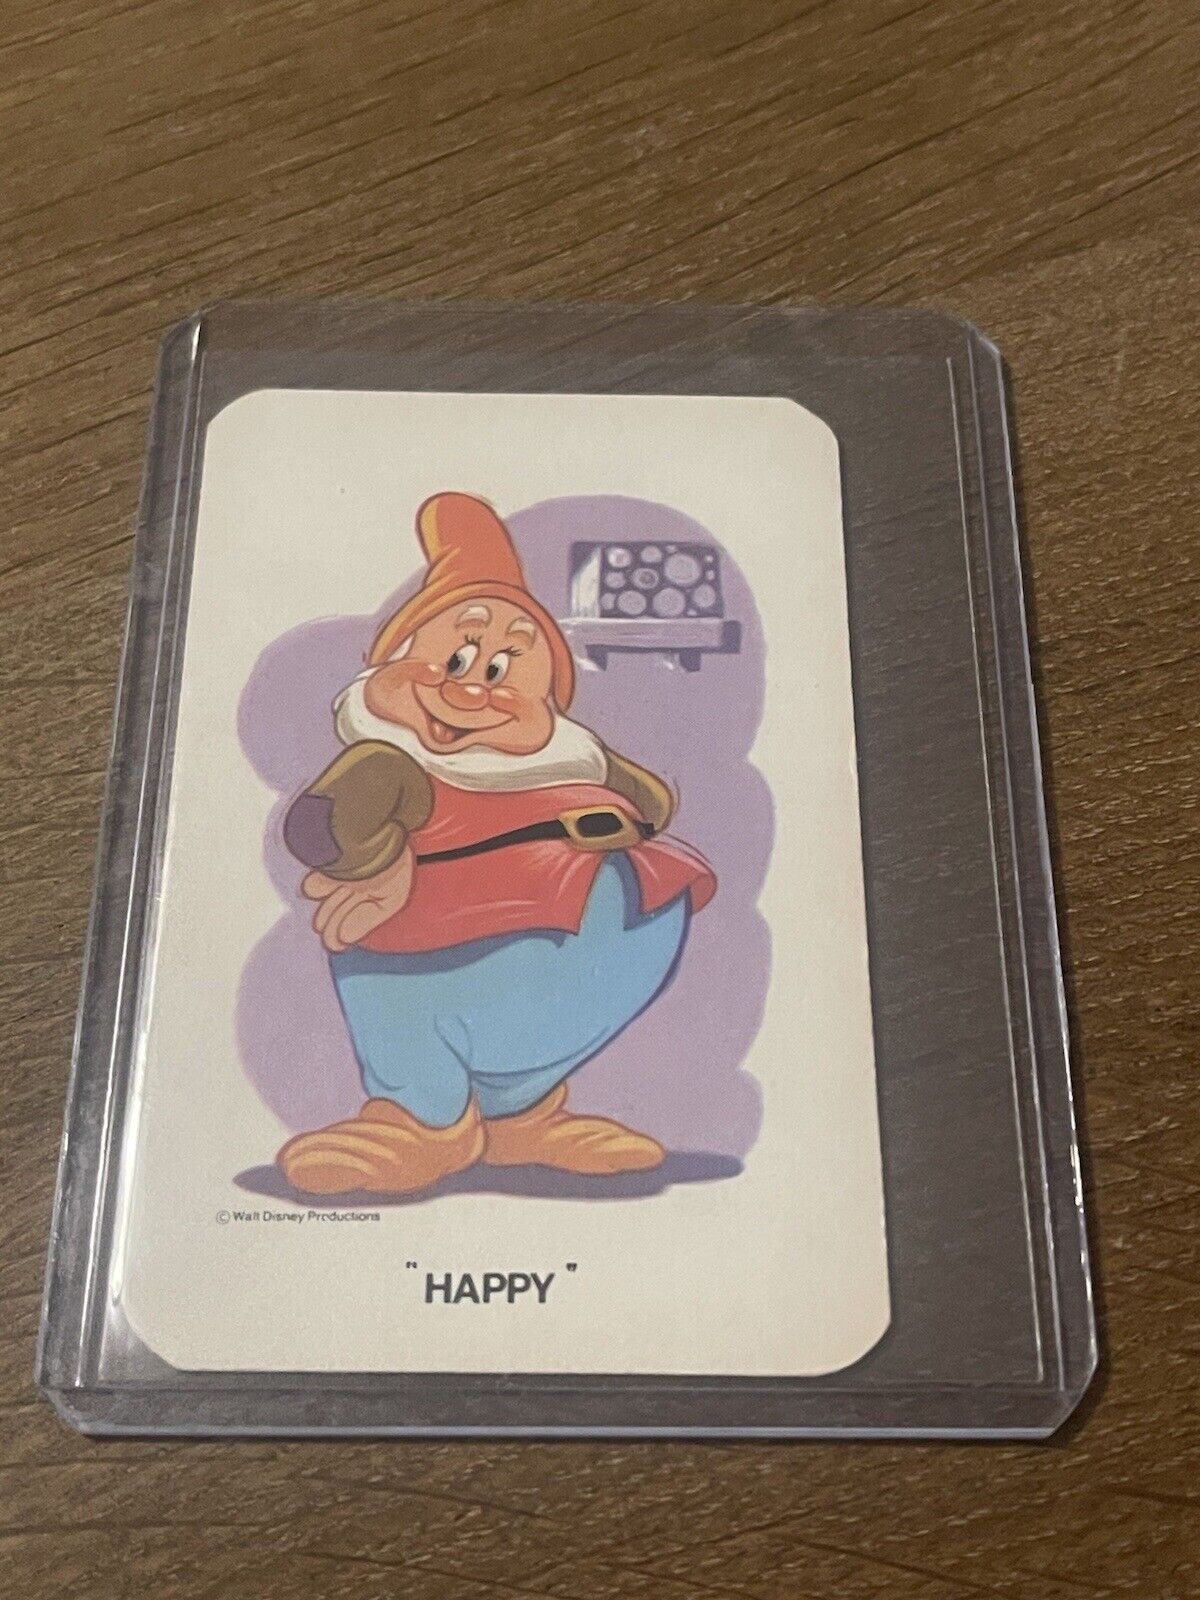 Authentic Vintage Walt Disney Productions Snap Happy Card RARE DISNEYANA